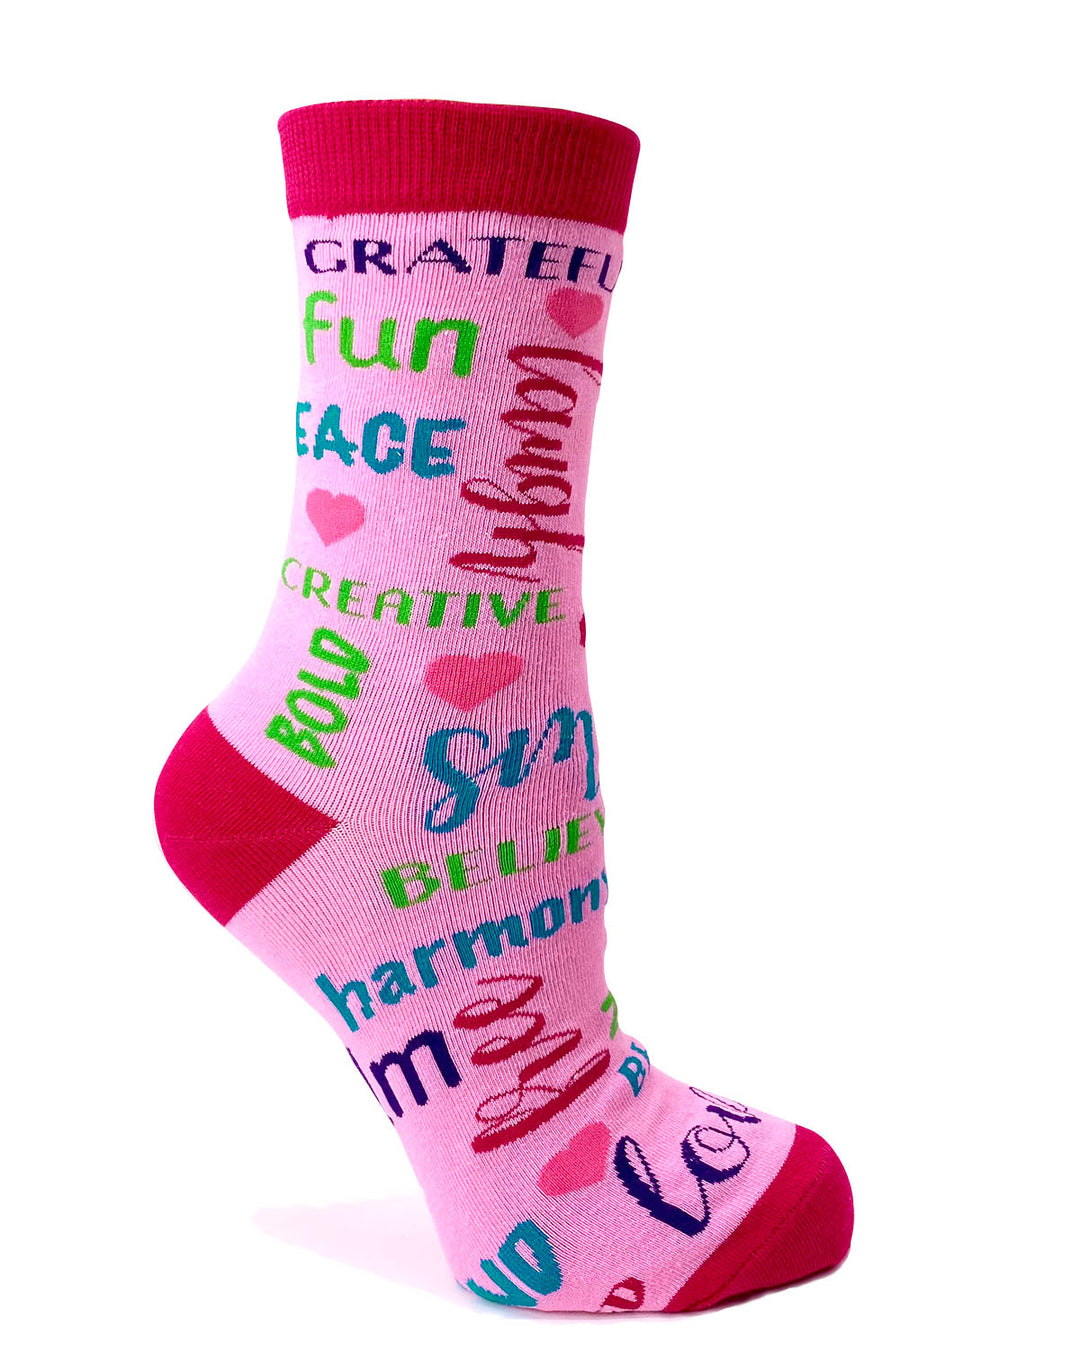 Positivity Words Women's Crew Socks